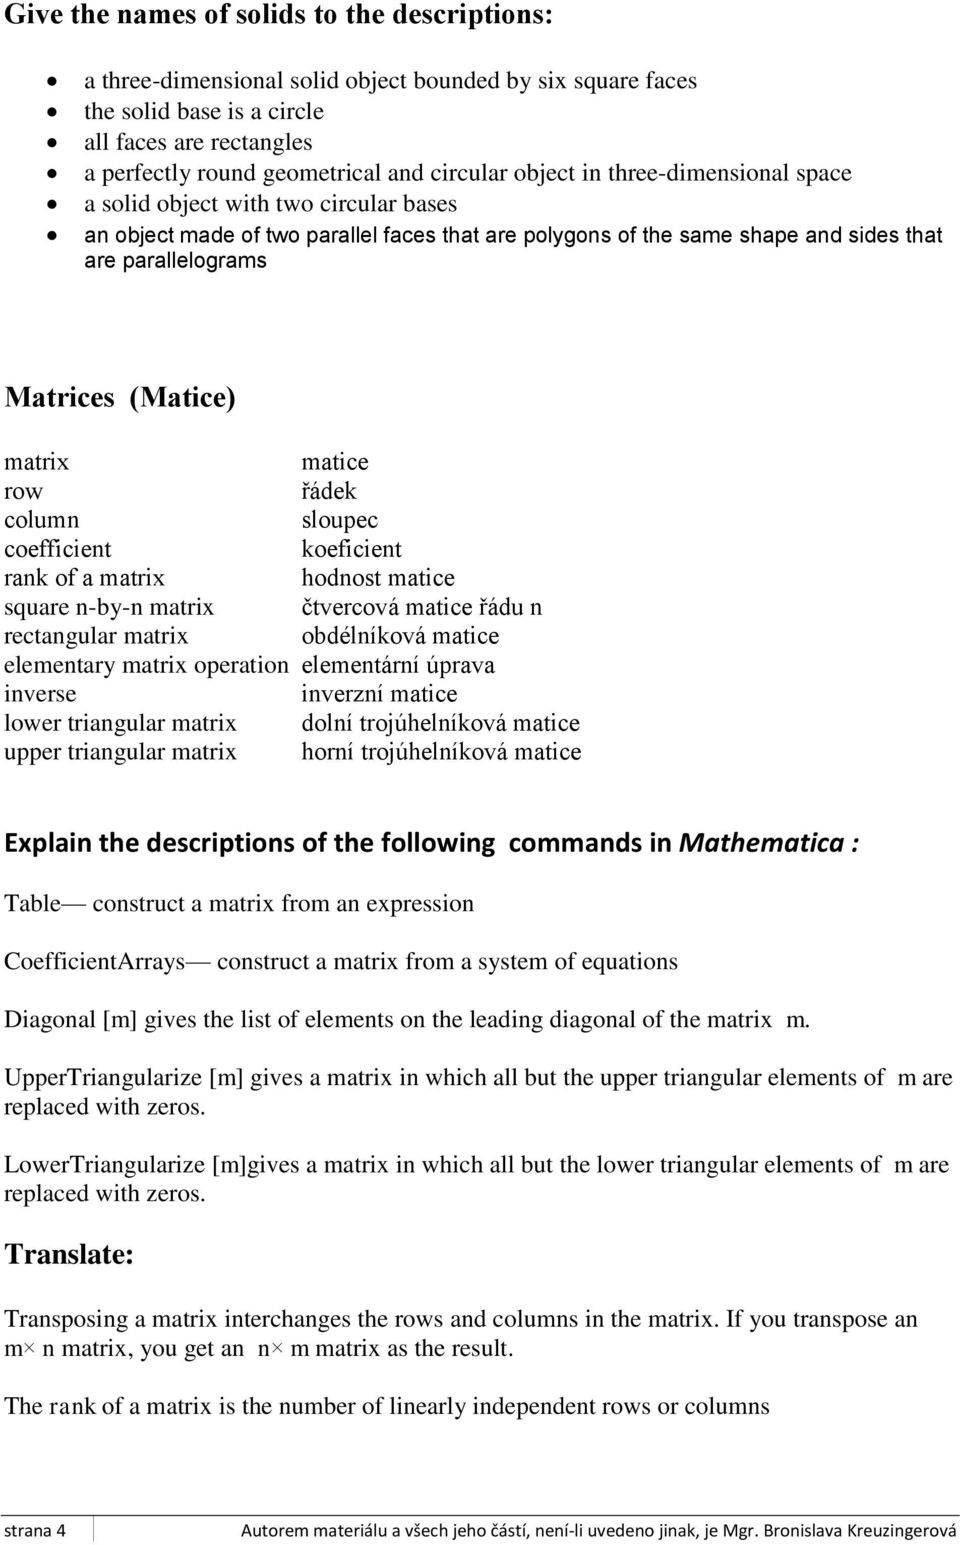 (Matice) matrix matice row řádek column sloupec coefficient koeficient rank of a matrix hodnost matice square n-by-n matrix čtvercová matice řádu n rectangular matrix obdélníková matice elementary